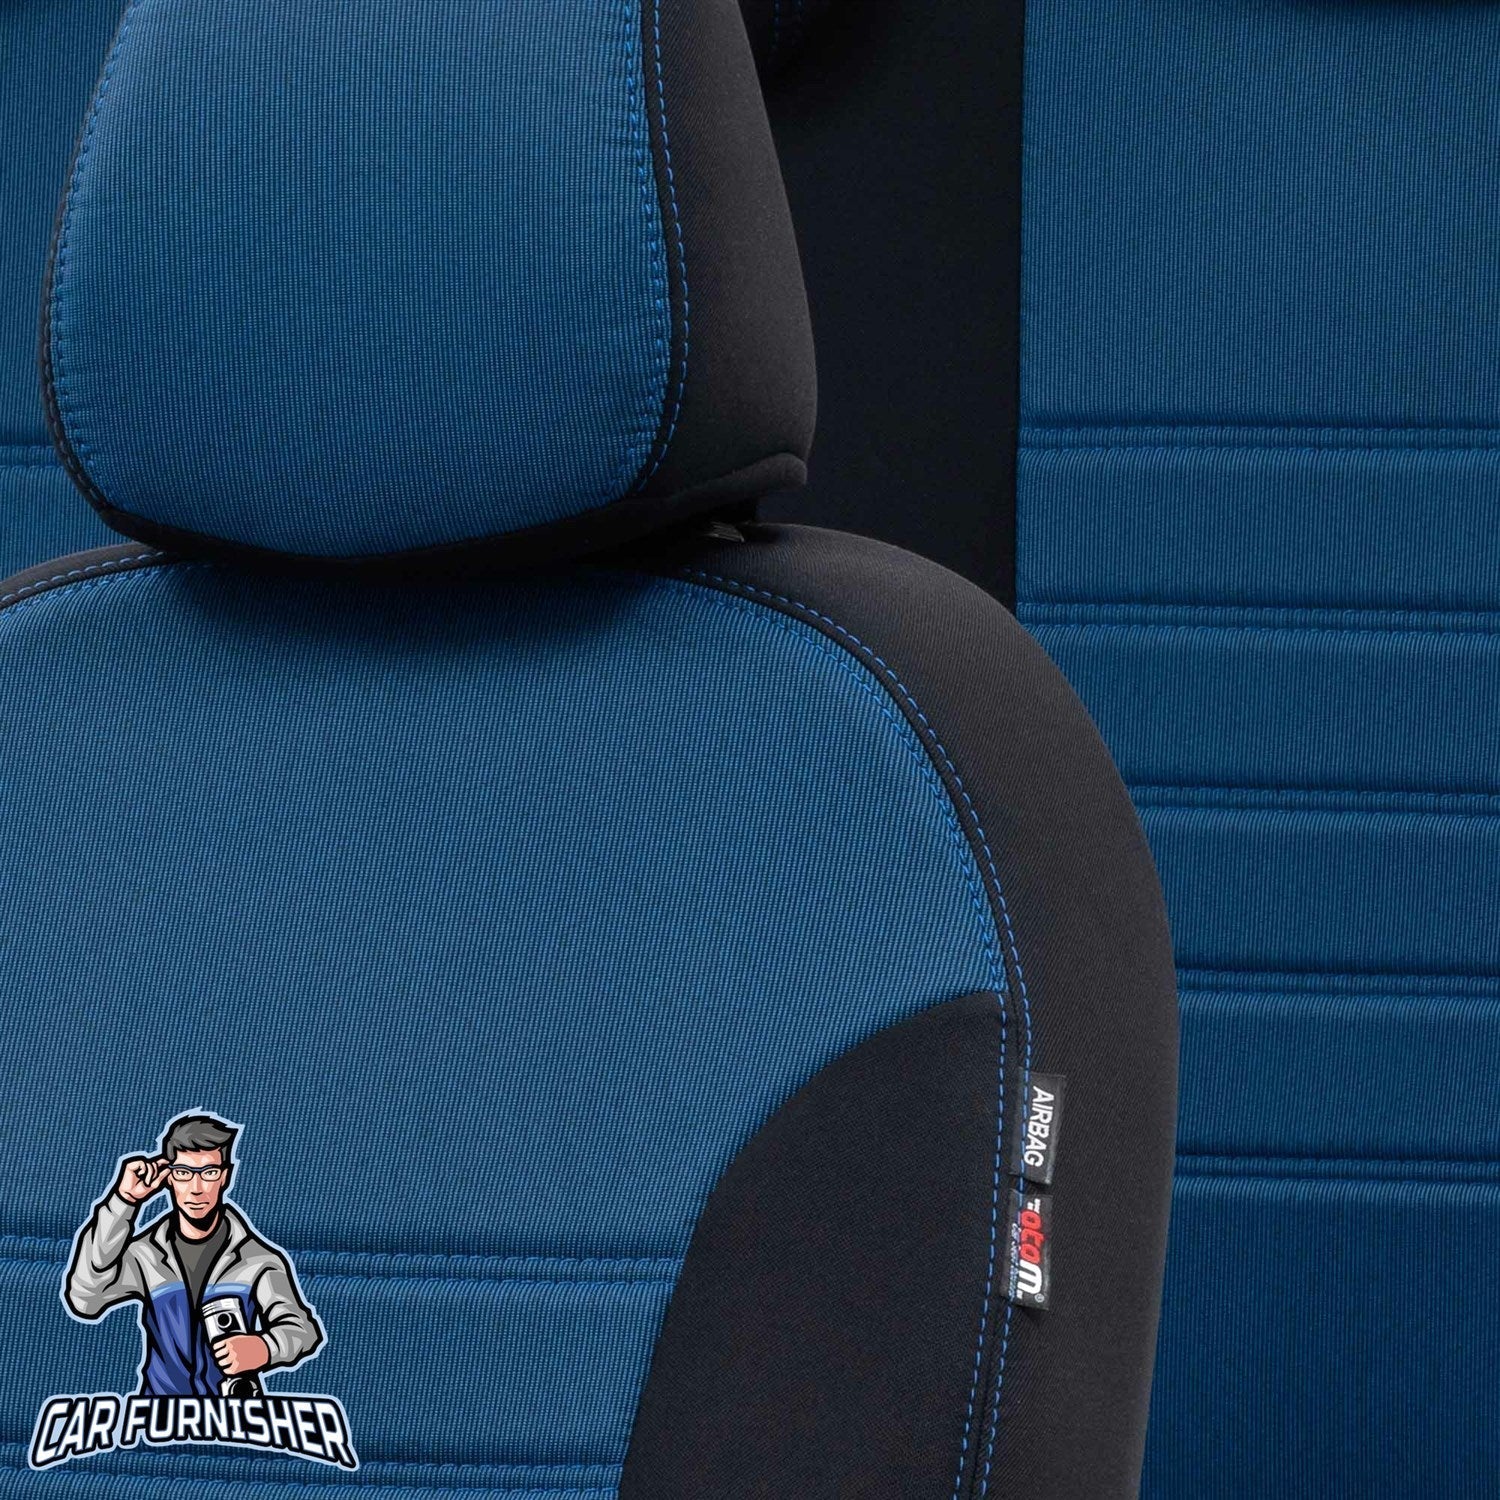 Skoda Roomster Car Seat Covers 2007-2014 Original Design Blue Jacquard Fabric